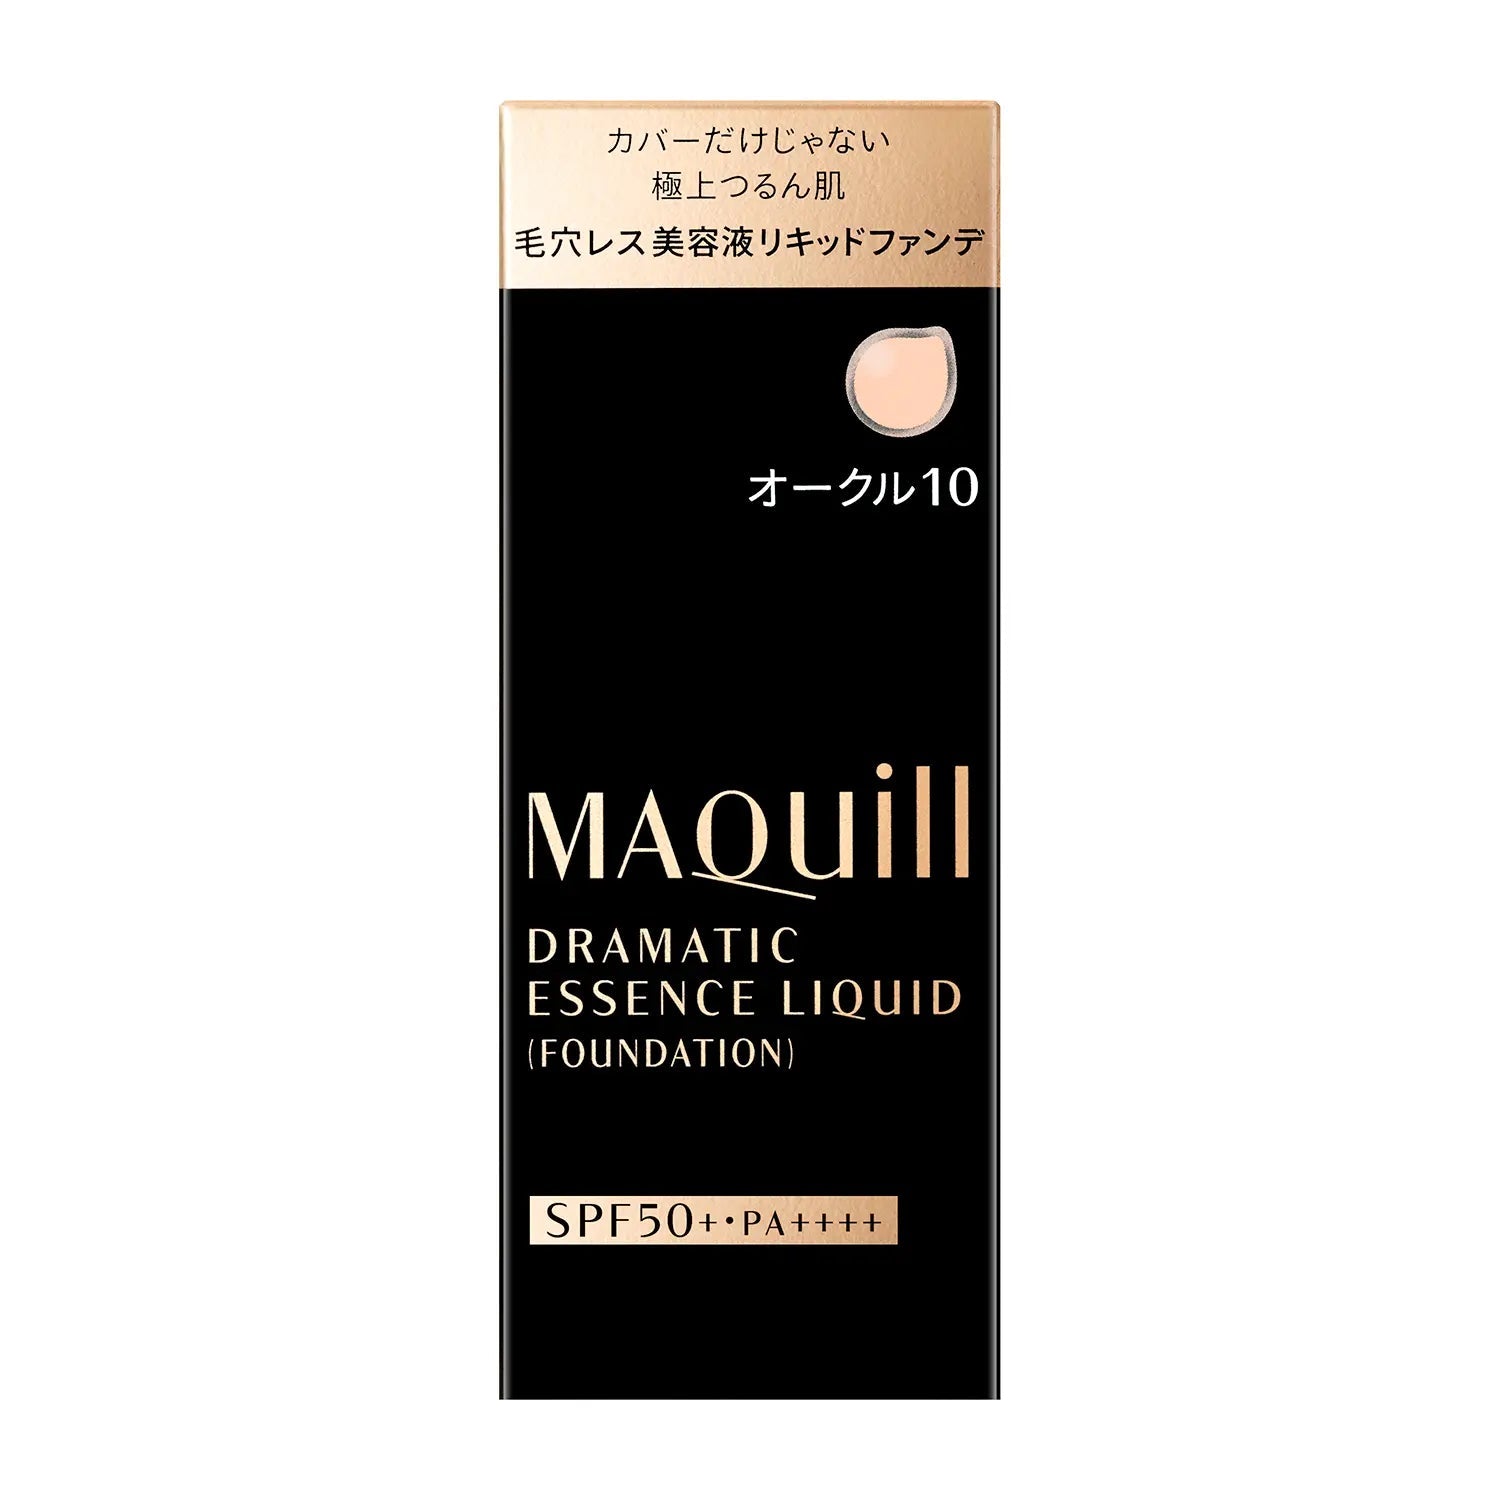 Maquillage Dramatic Essence Liquid - Ichiban Mart